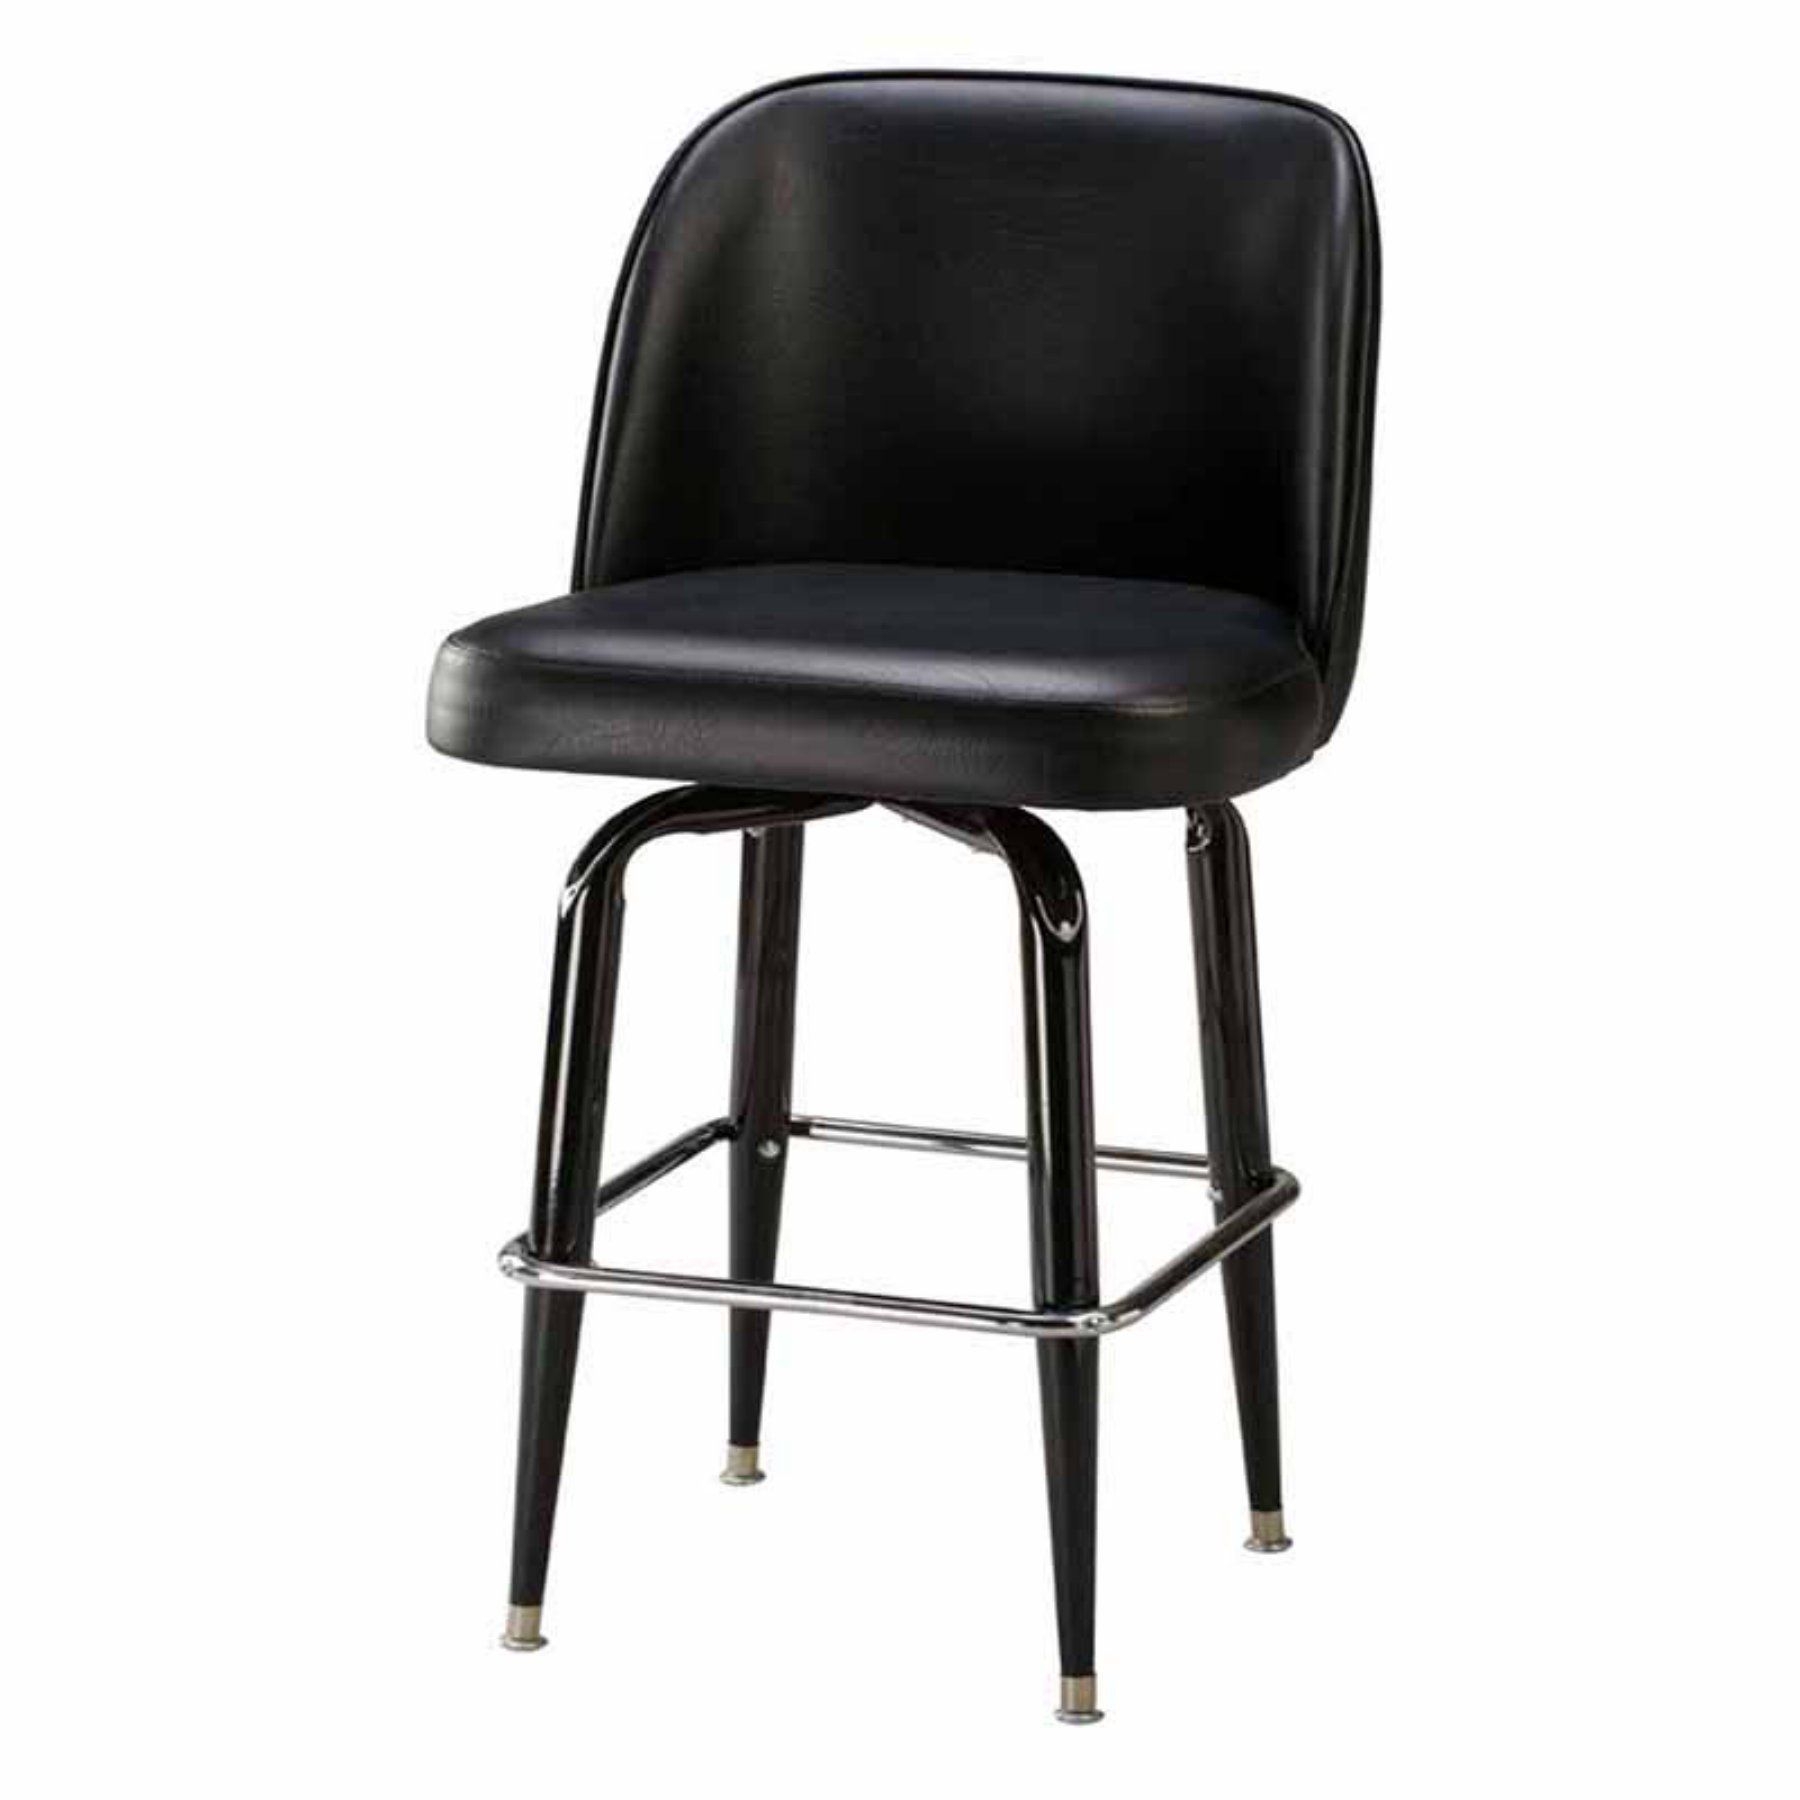 Large bucket bar stool seat